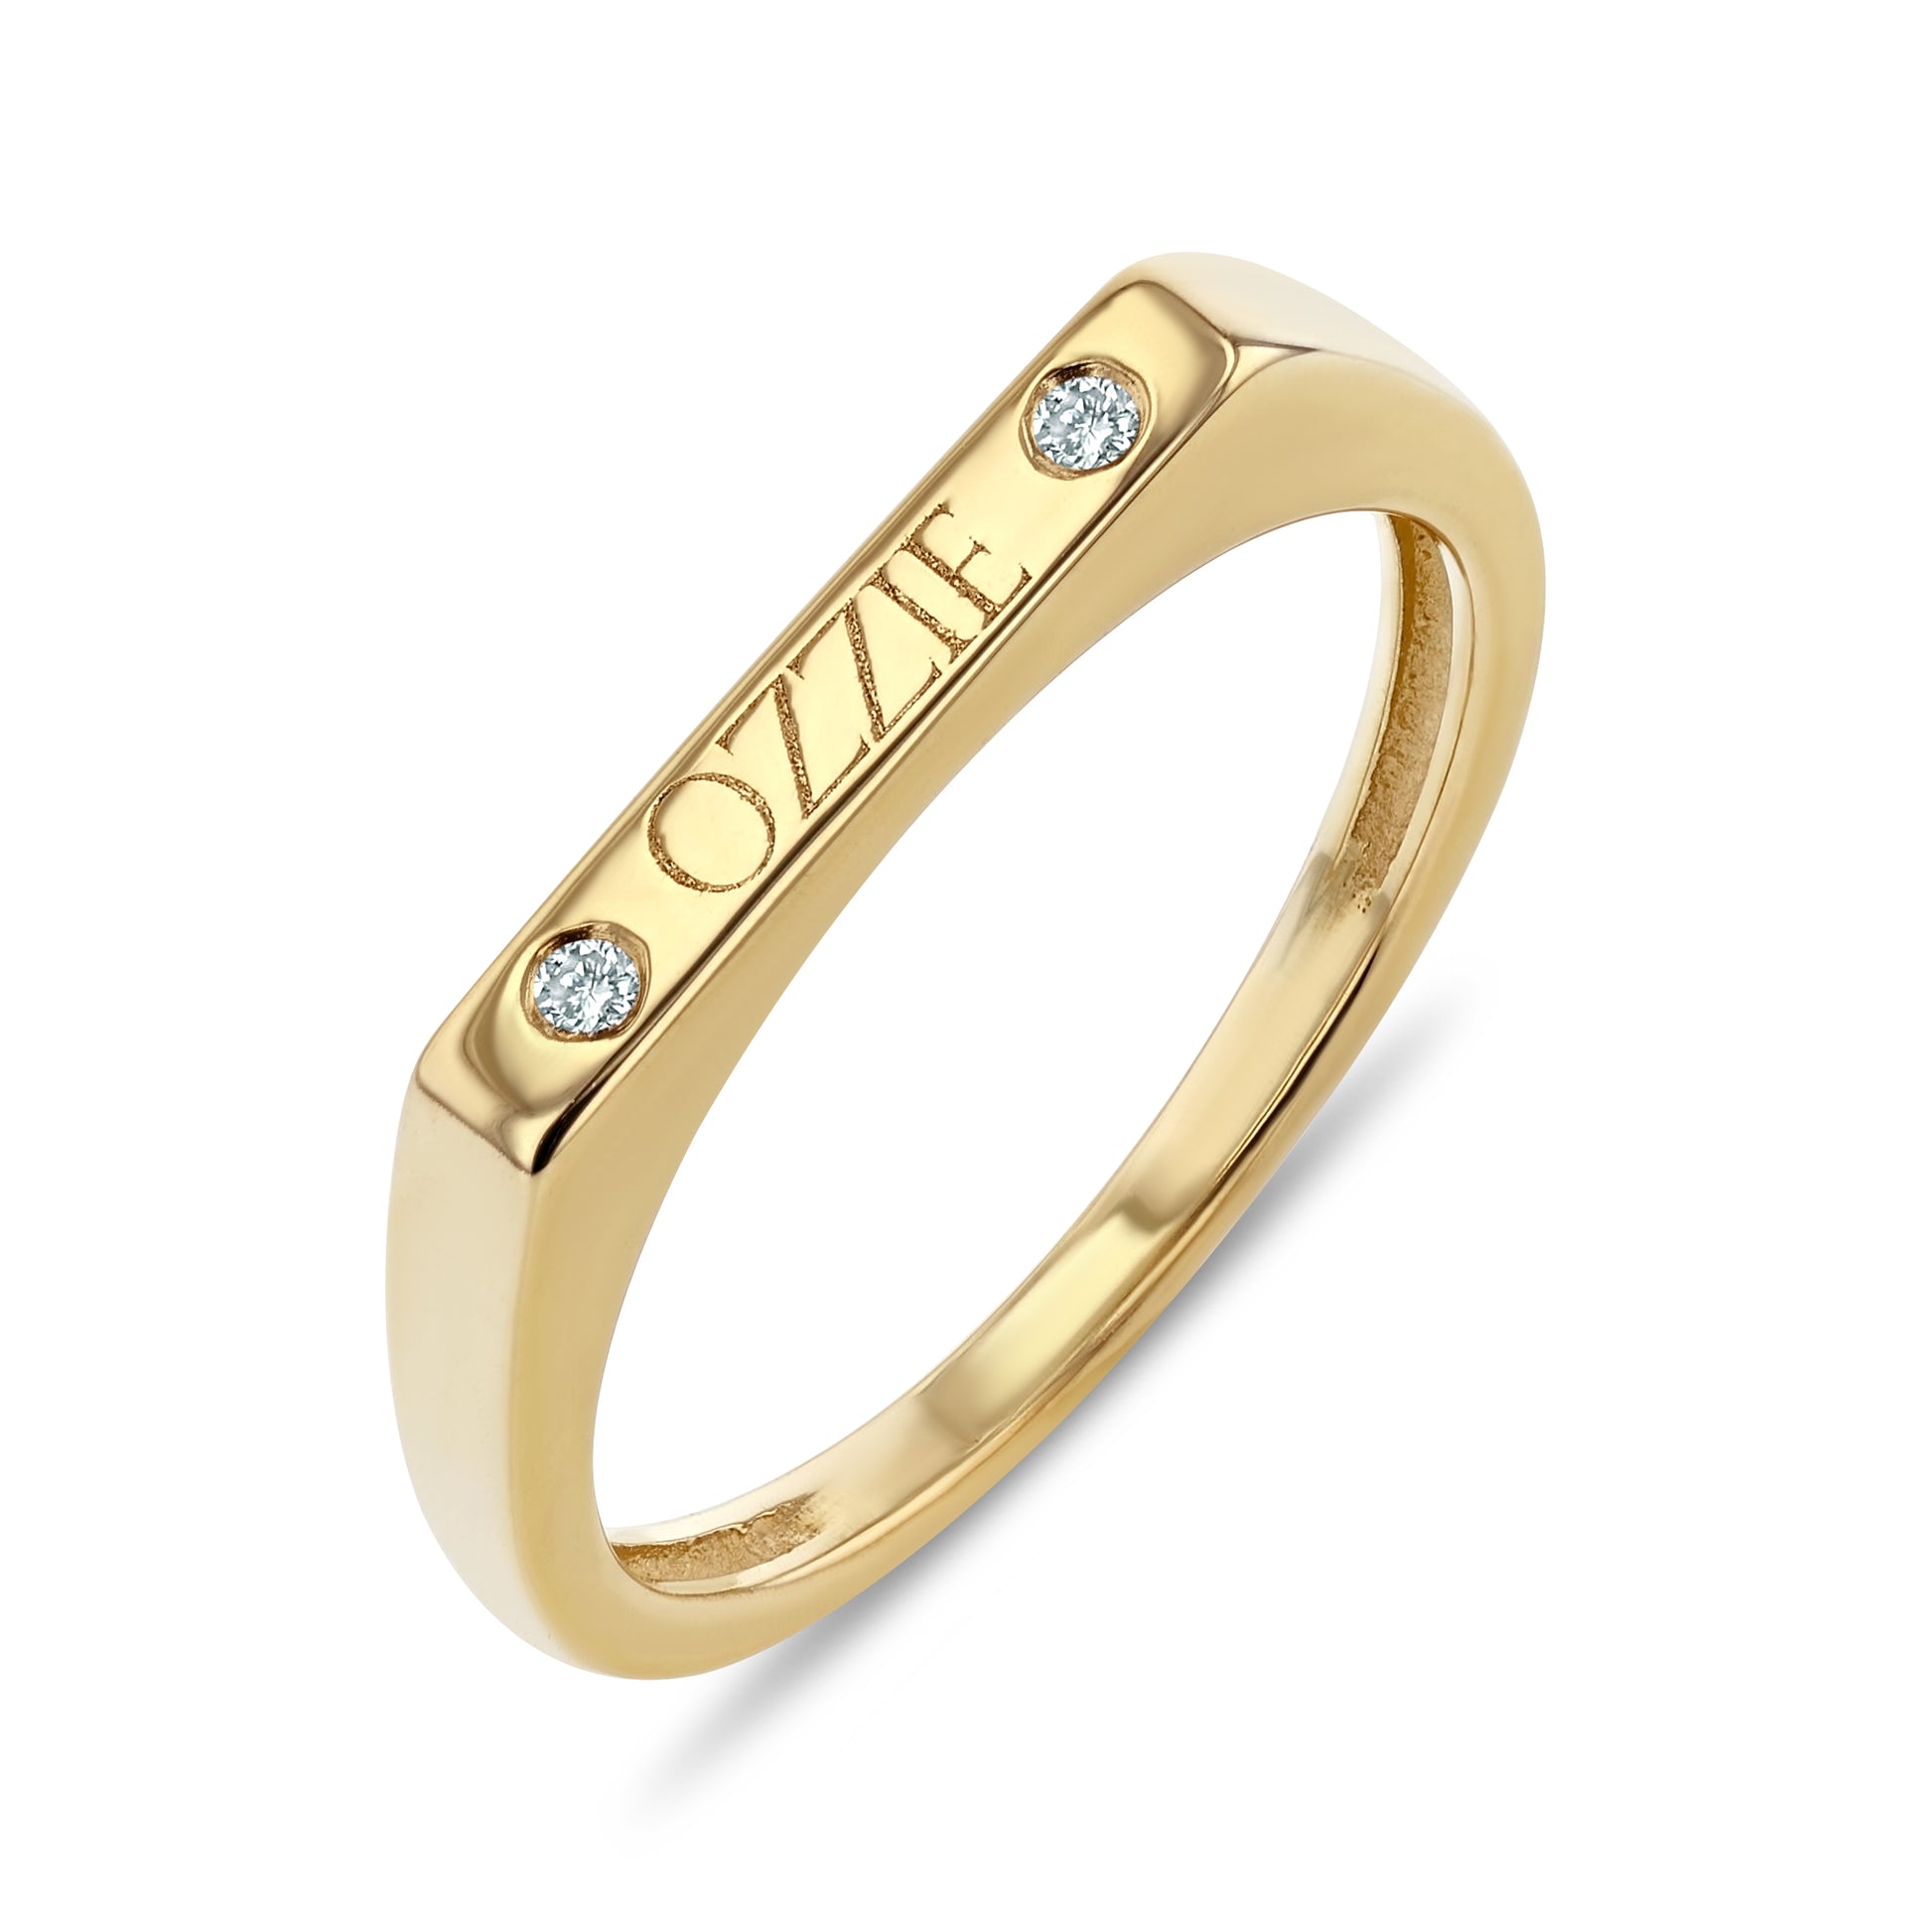 NAME BAR RING GOLD - Lalu Jewellery